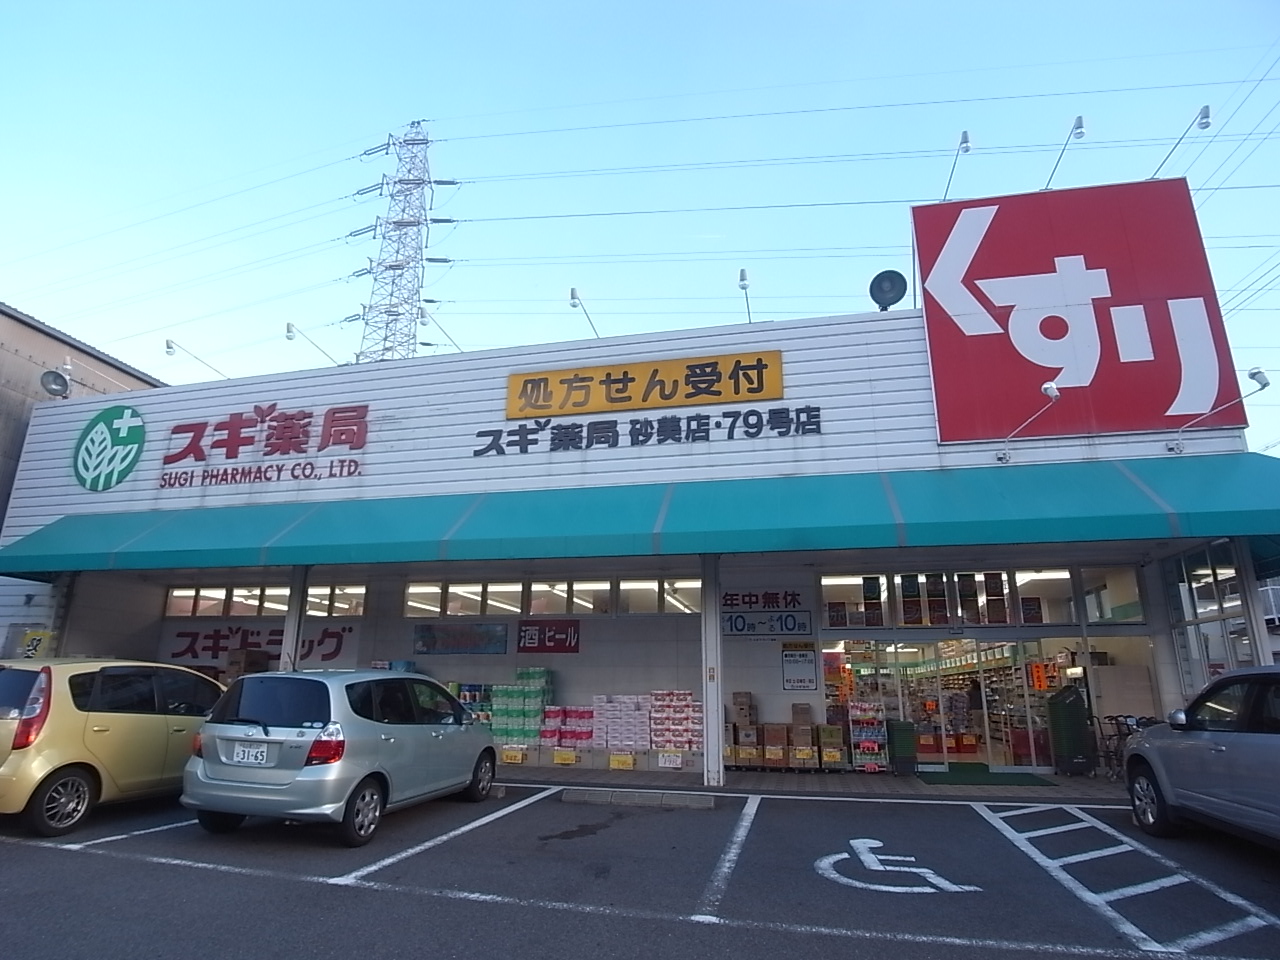 Dorakkusutoa. Cedar pharmacy Sunami shop 1900m until (drugstore)